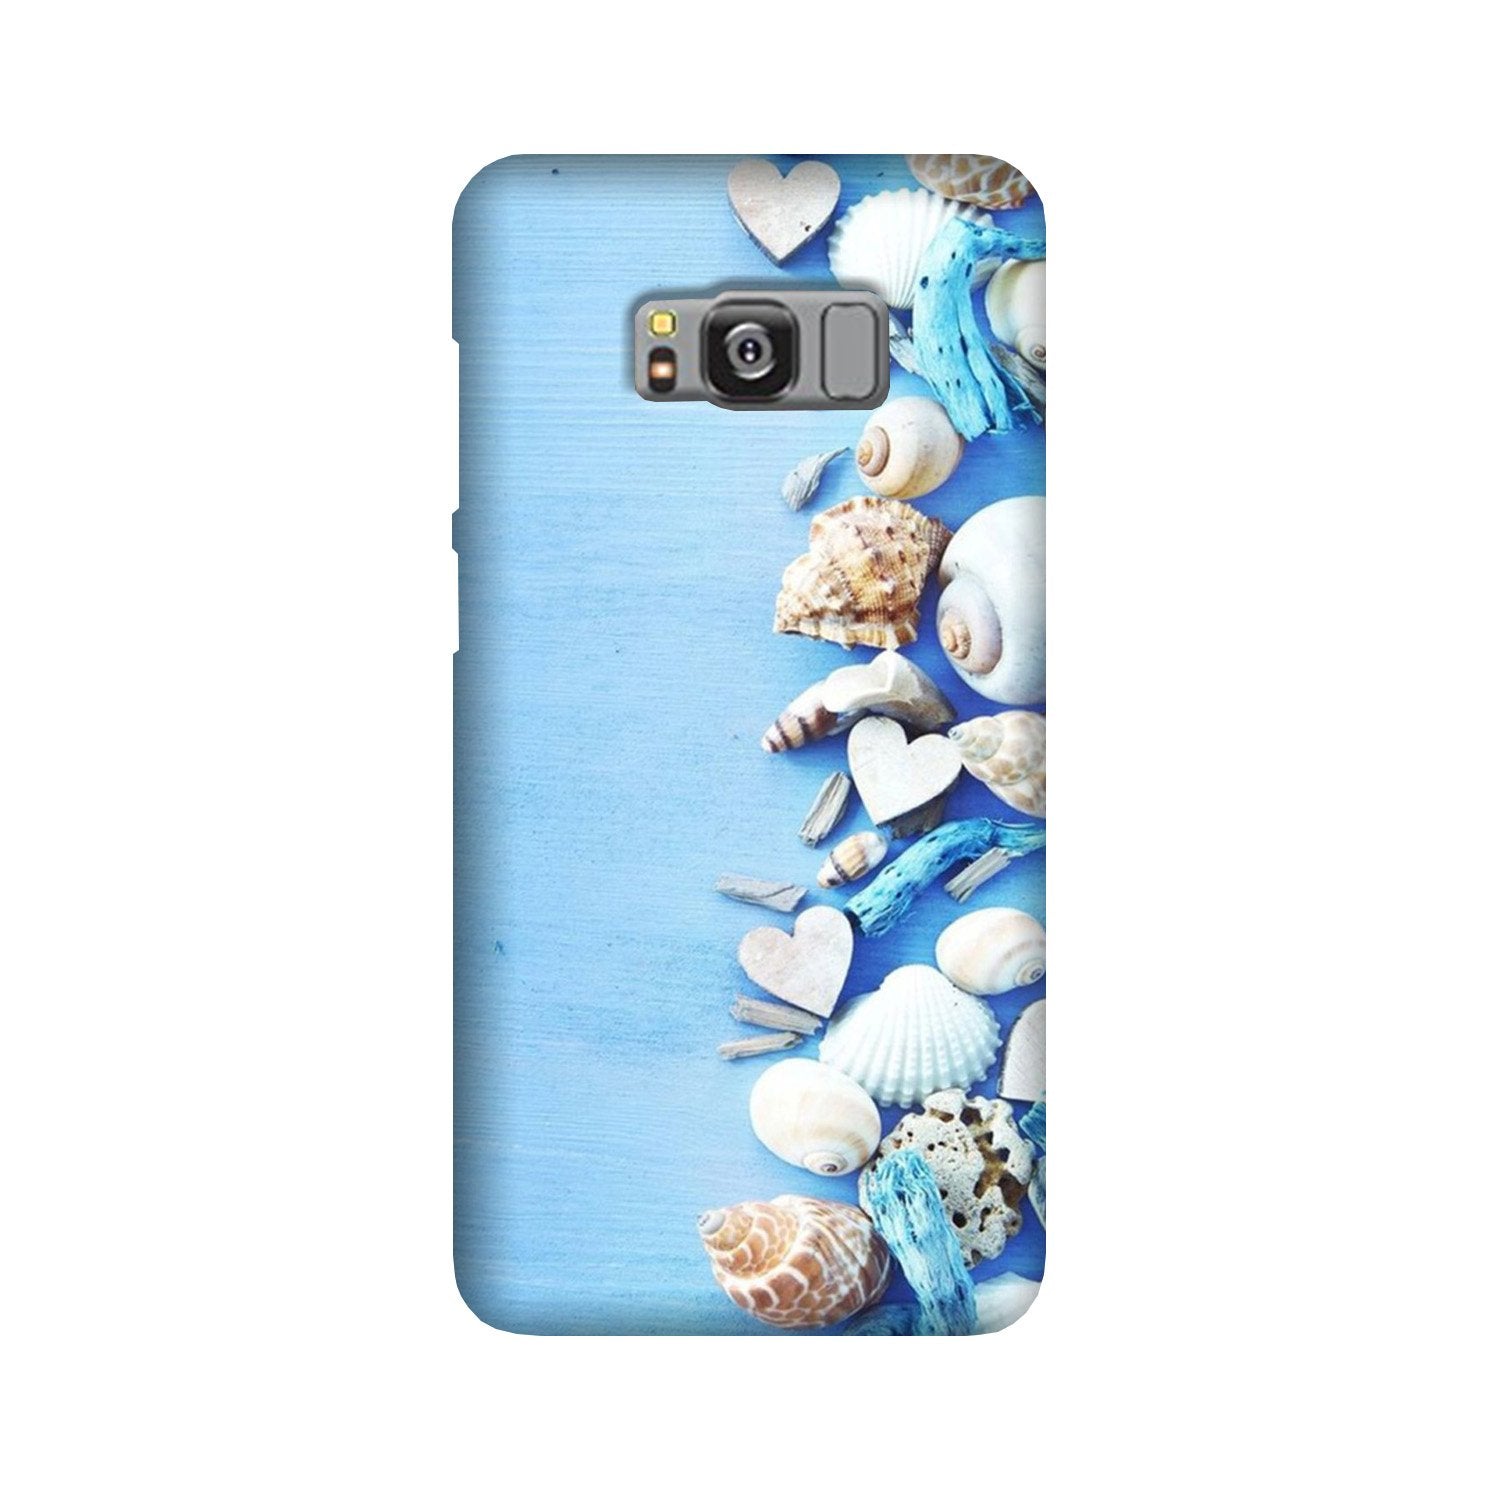 Sea Shells2 Case for Galaxy S8